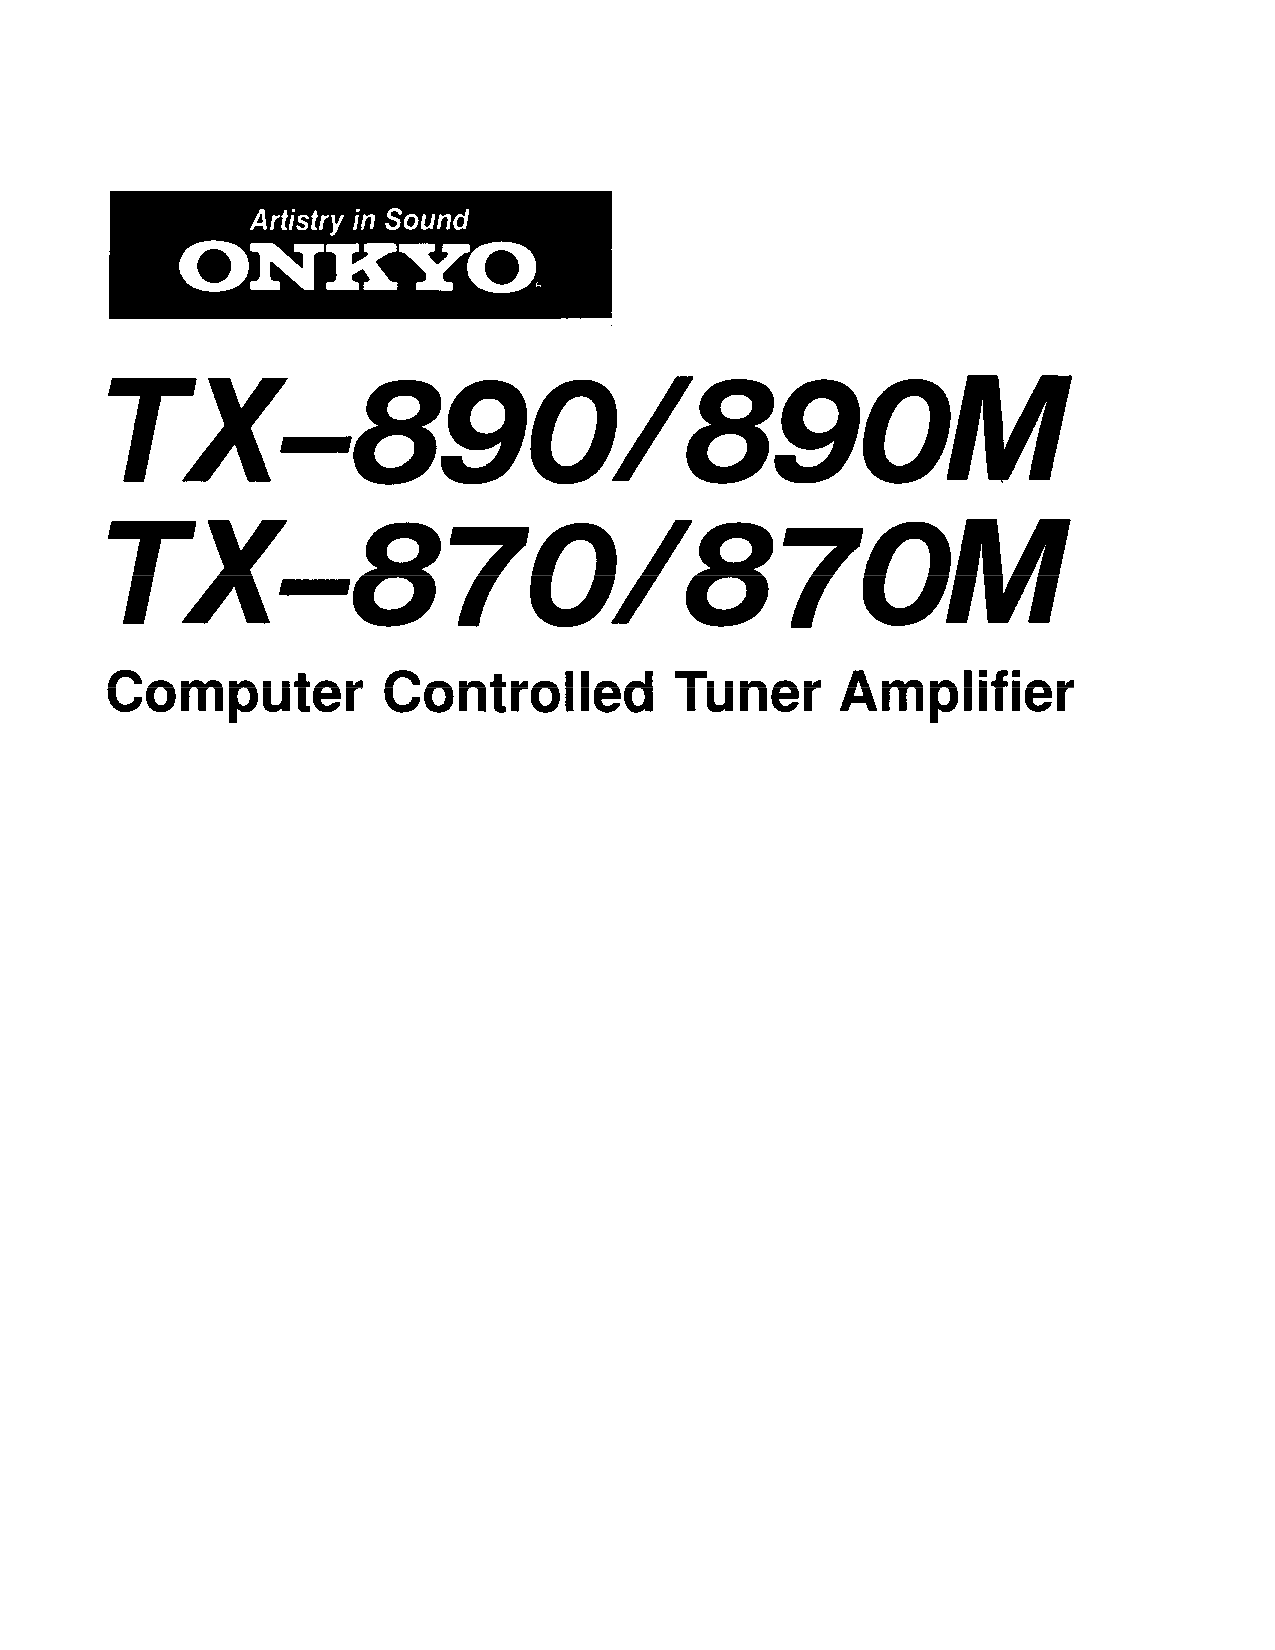 Onkyo TX-870, TX-870M, TX-890, TX-890M Instruction Manual